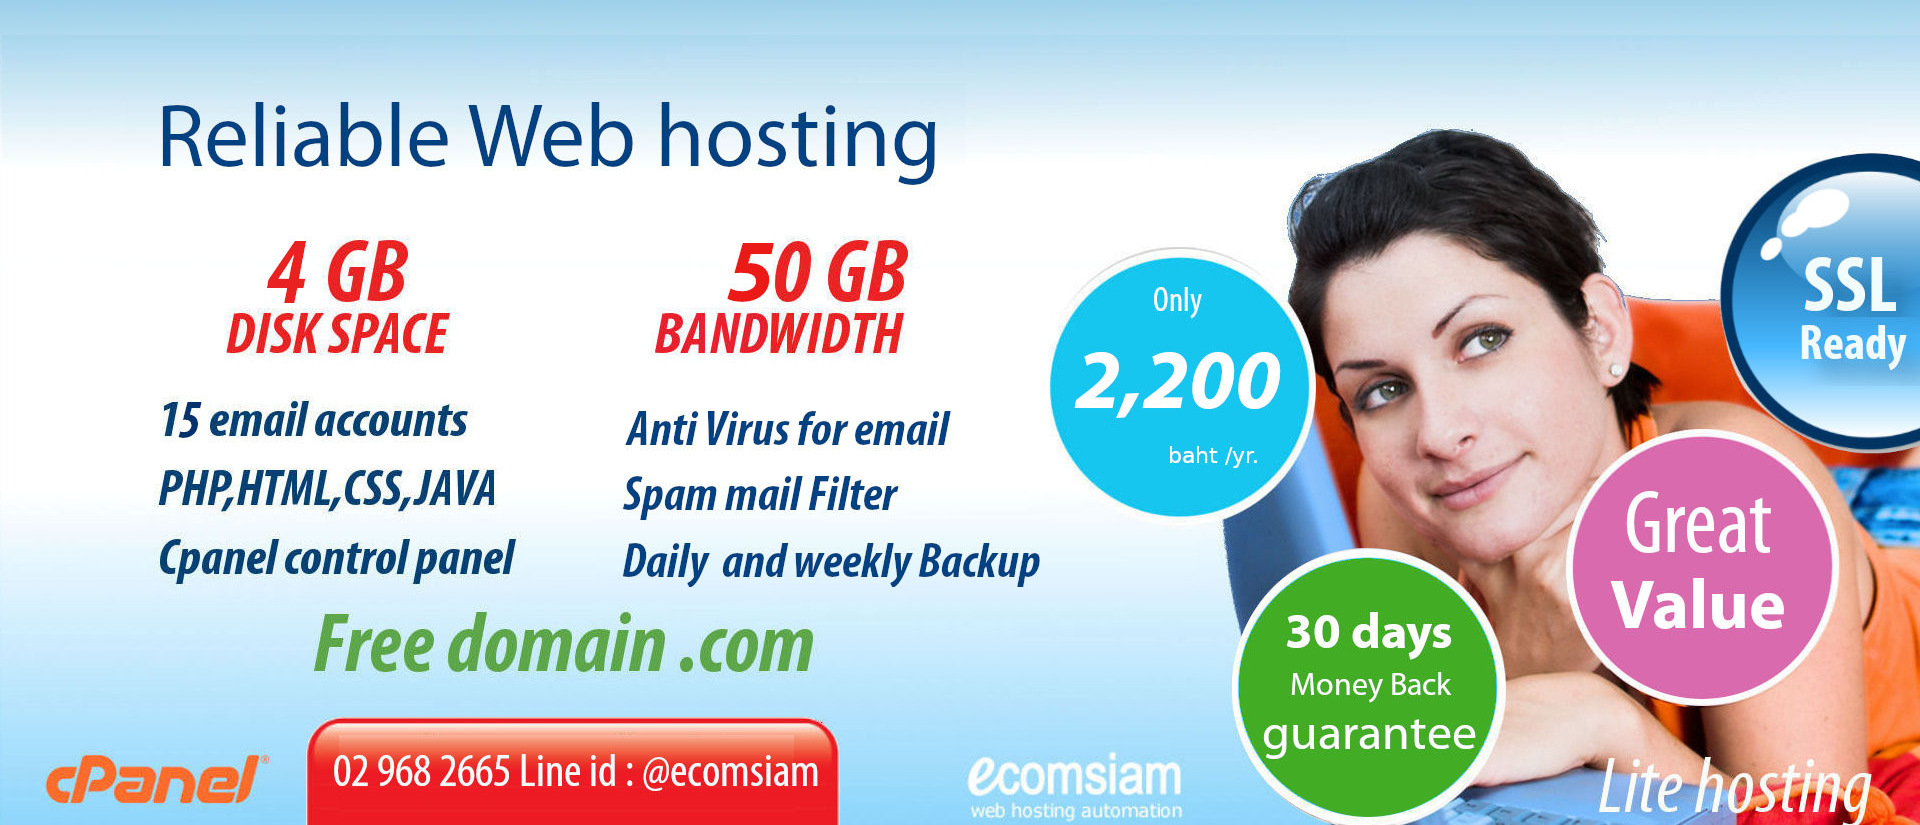 web hosting ไทย เริ่มต้นเพียง 1,600 บ./ปี ฟรีโดเมน .com ตลอดการใช้งาน  แนะนำ web hosting ไทย พื้นที่มาก ราคาไม่แพง ปลอดภัย ฟรีโดเมน ฟรี SSL พร้อม Daily/week backup ป้องกันไวรัสจากอีเมล์ กรองสแปมเมล์ และอื่นๆอีกมากมาย